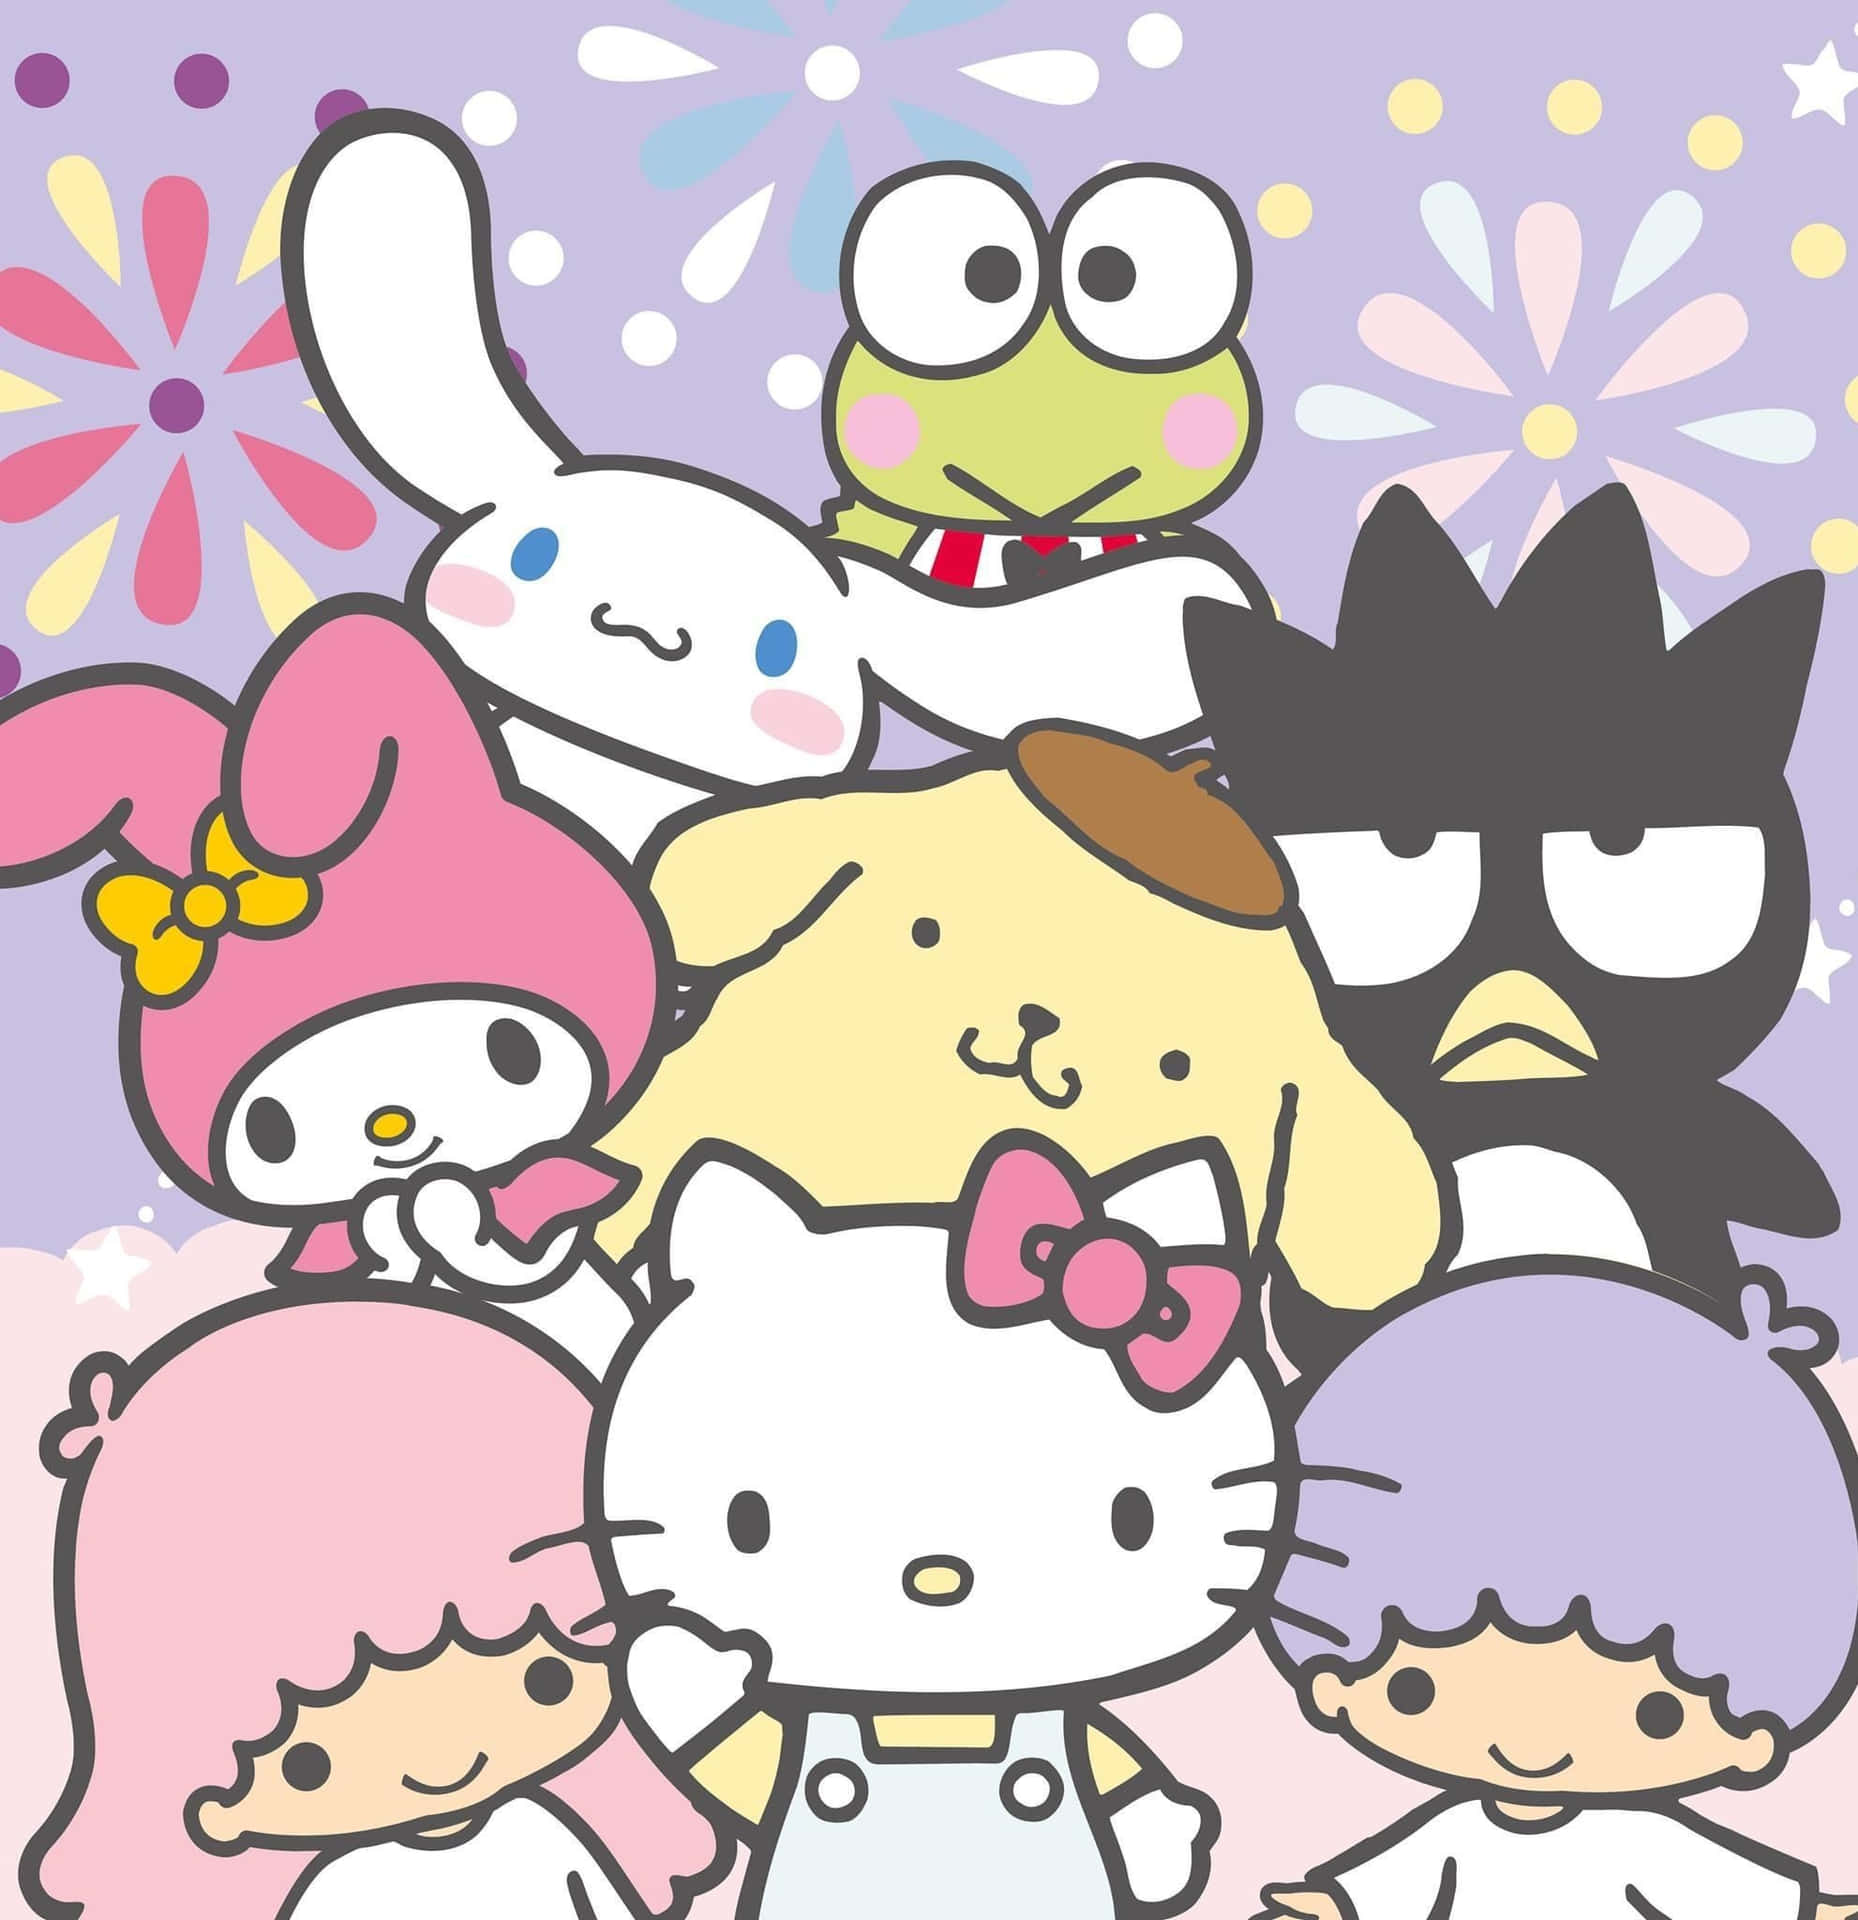 410 Hello Kitty and friends ideas in 2023  hello kitty kitty hello kitty  wallpaper